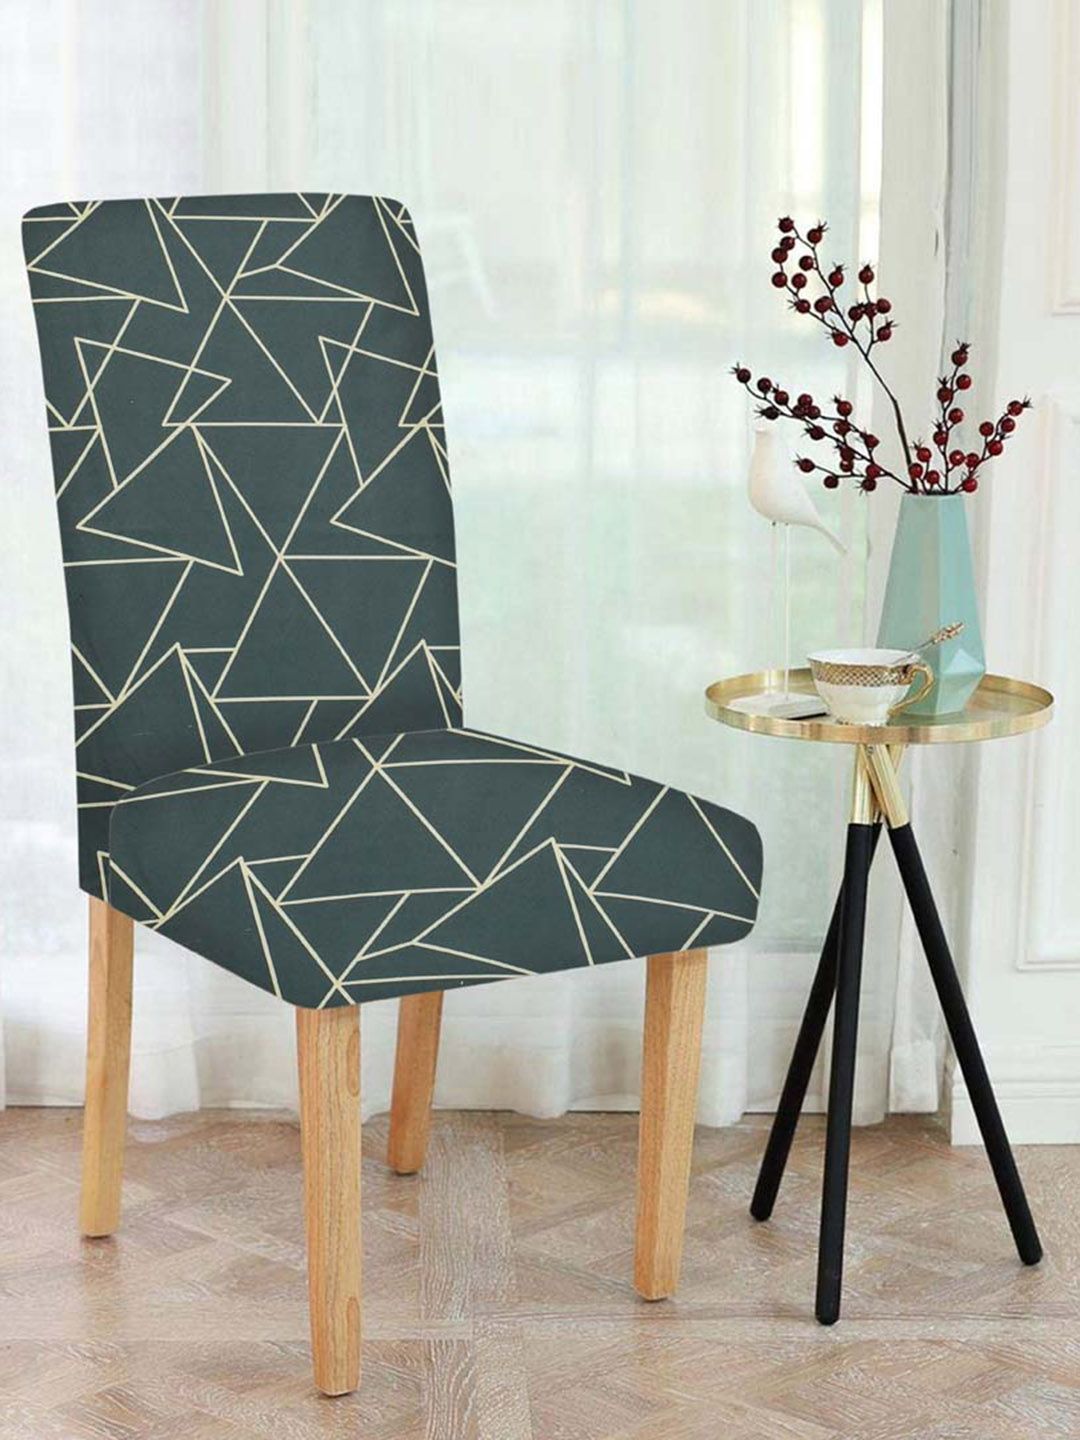 Slushy Mushy Set of 6 Printed Chair Covers Price in India